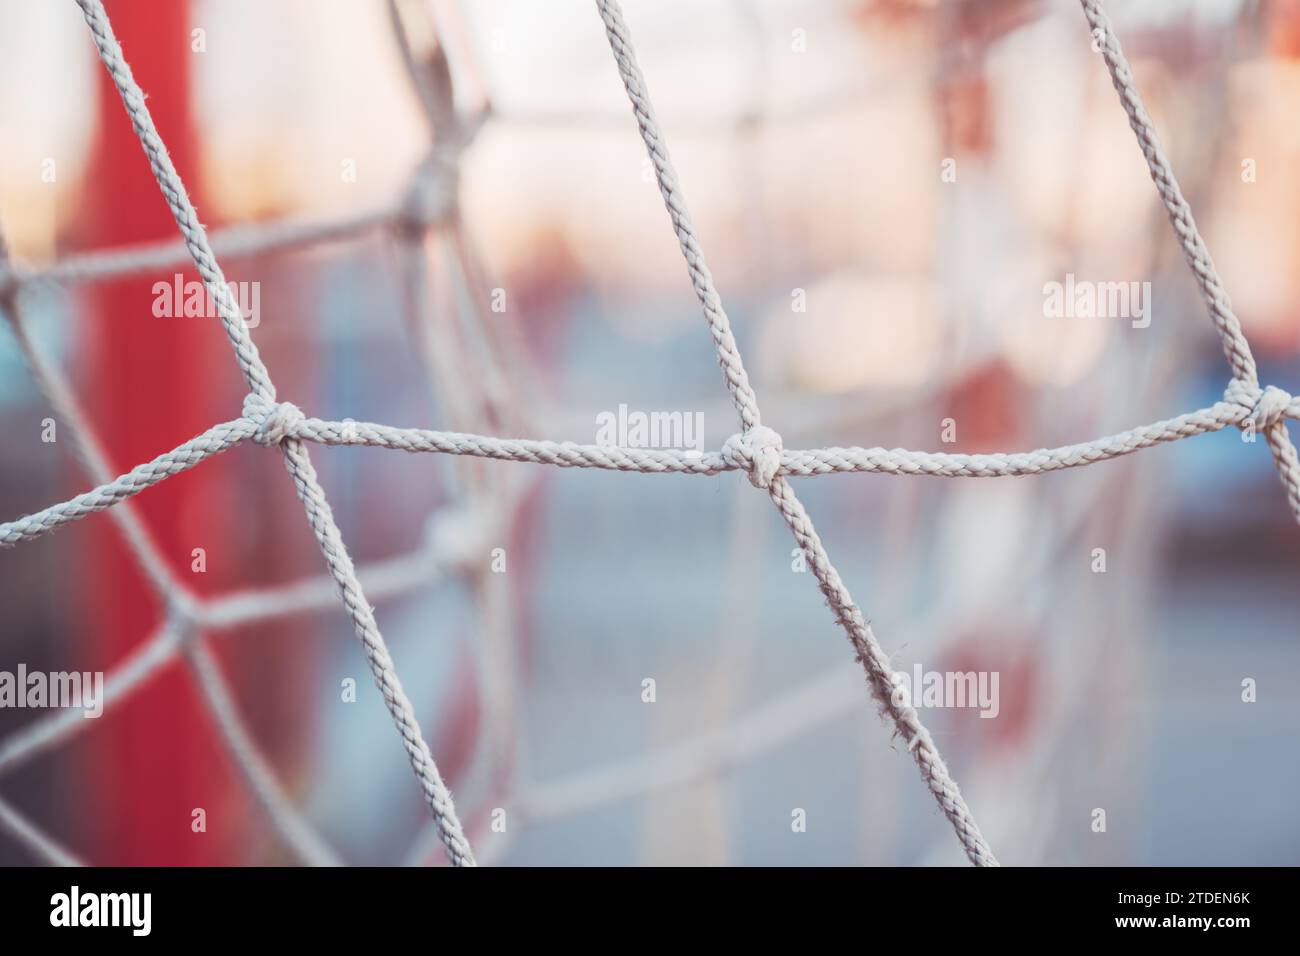 Soccer goal net knot, closeup with selective focus Stock Photo